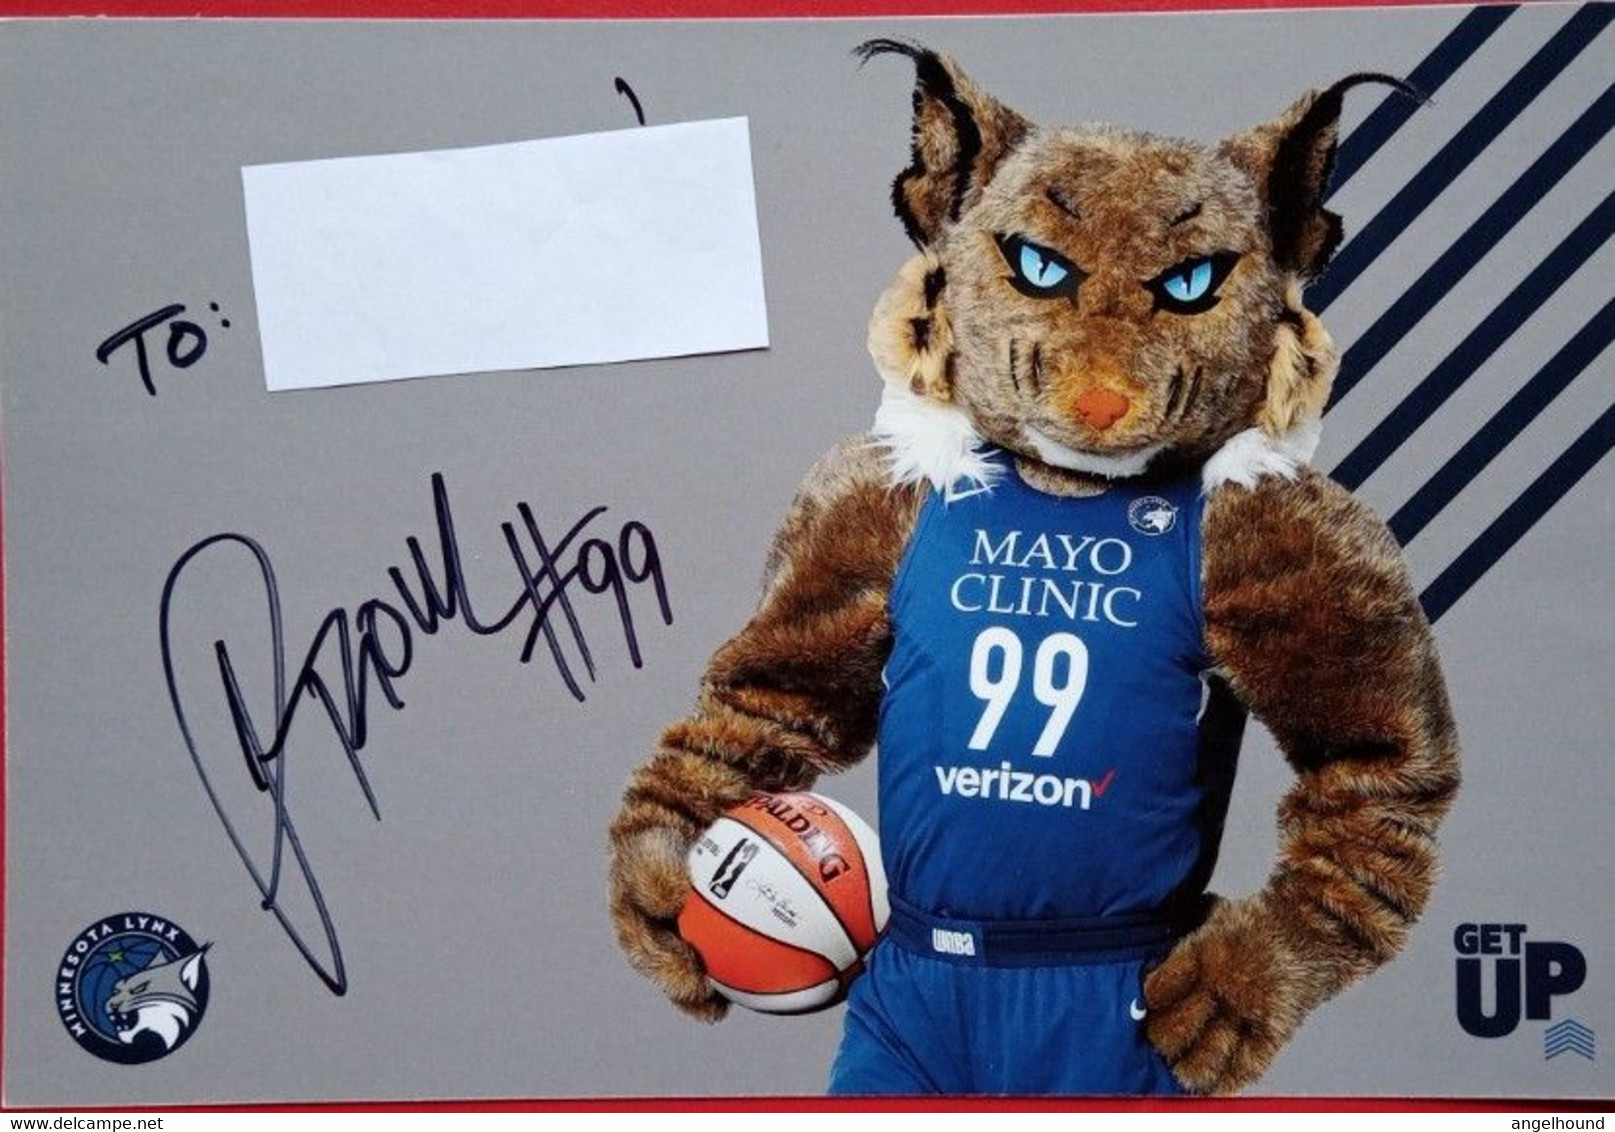 Prowl ( Minnesita Lynx Womens Basketball Team Mascot ) - Handtekening